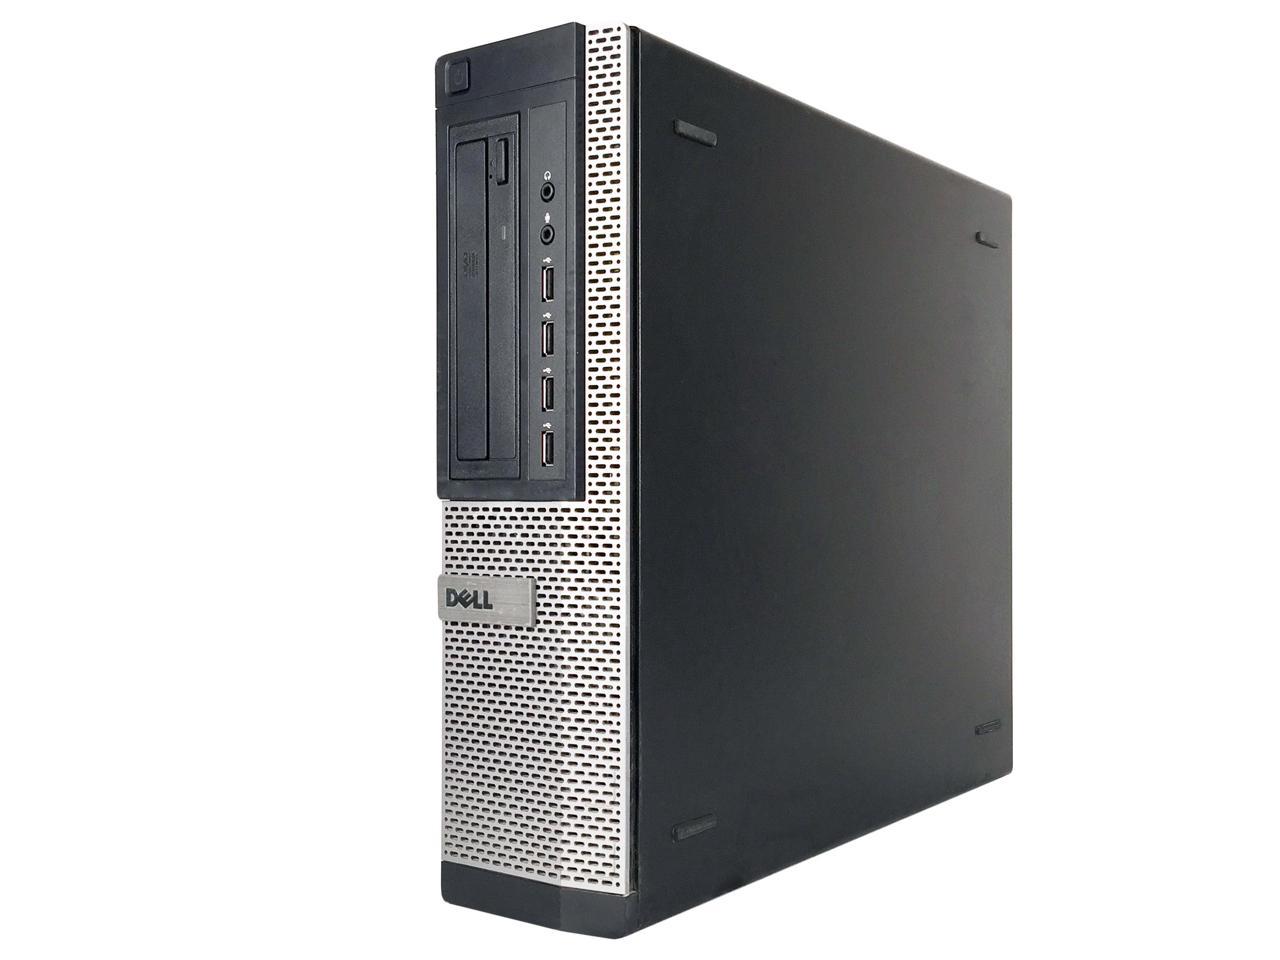 Refurbished Dell Grade A OptiPlex 990 Desktop Computer, Intel Core I5-2500 (3.3 GHz), 4G DDR3, 500G HDD, DVD, WIFI, Windows 10 Pro 64-bit (English/Spanish), 1 Year Warranty